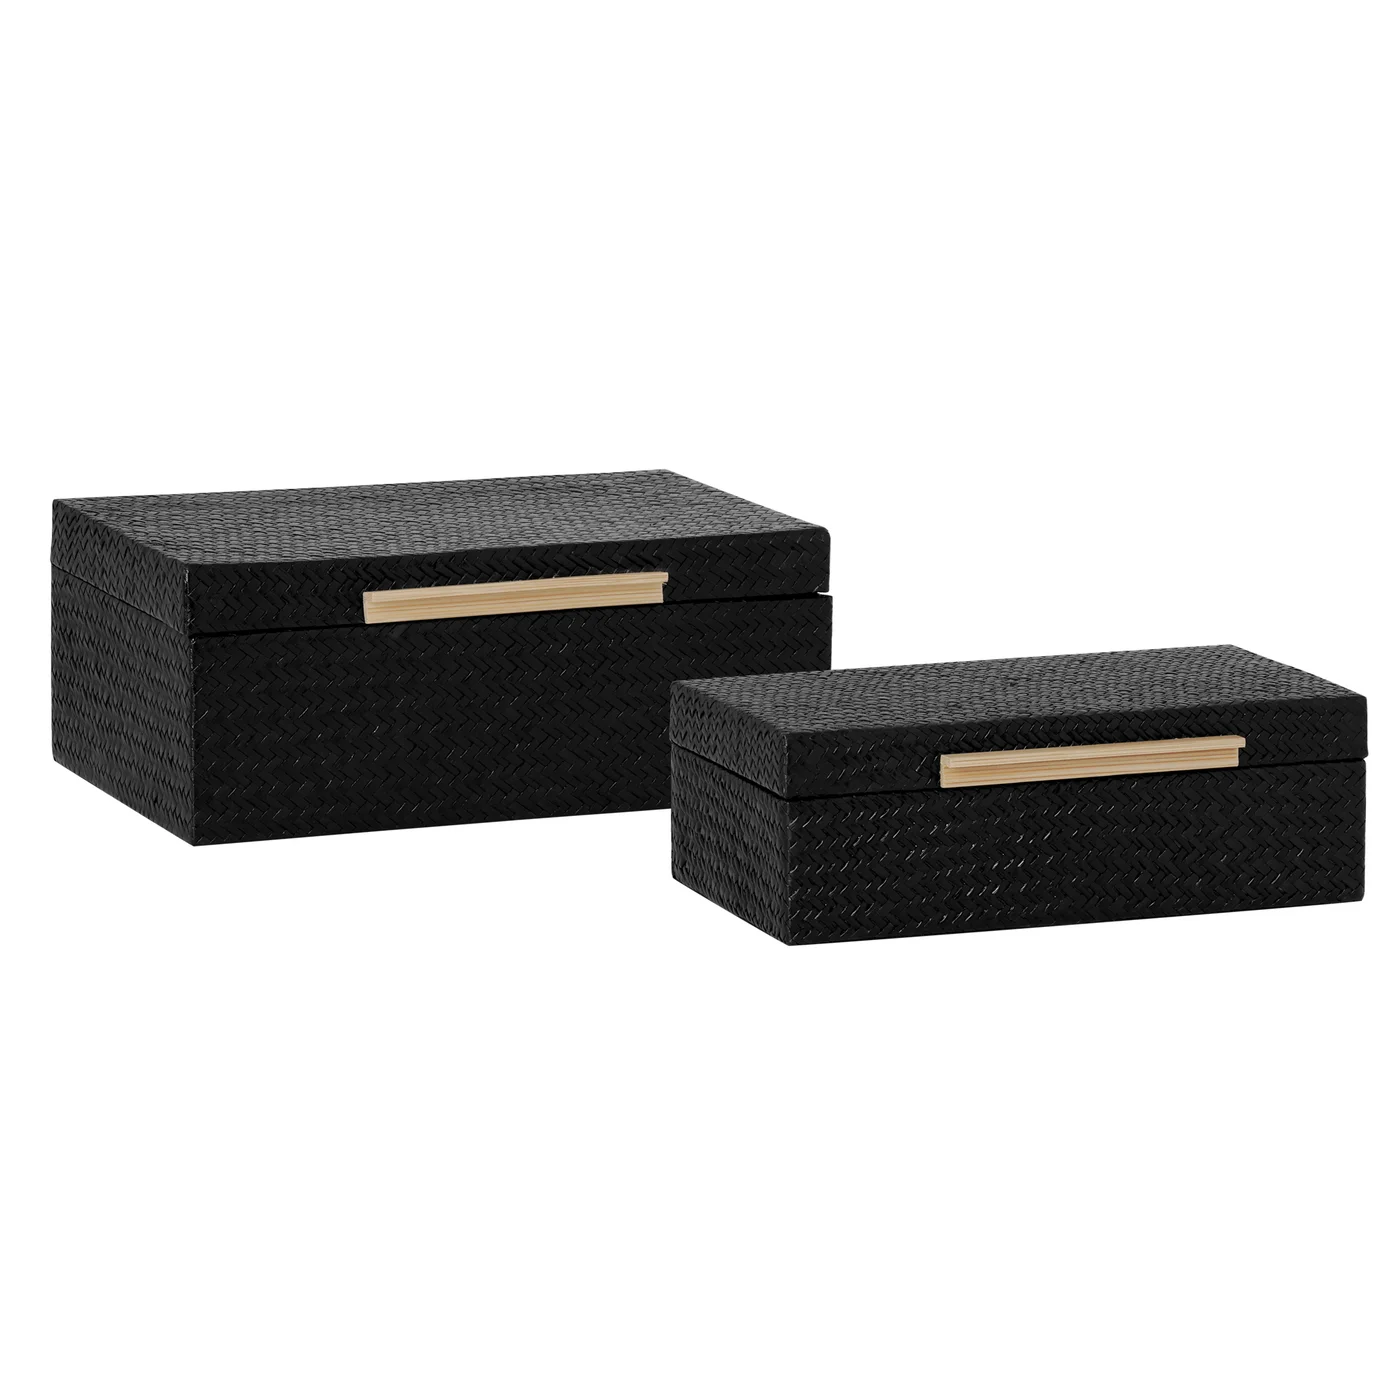 Black Herringbone Two Piece Storage Box Set